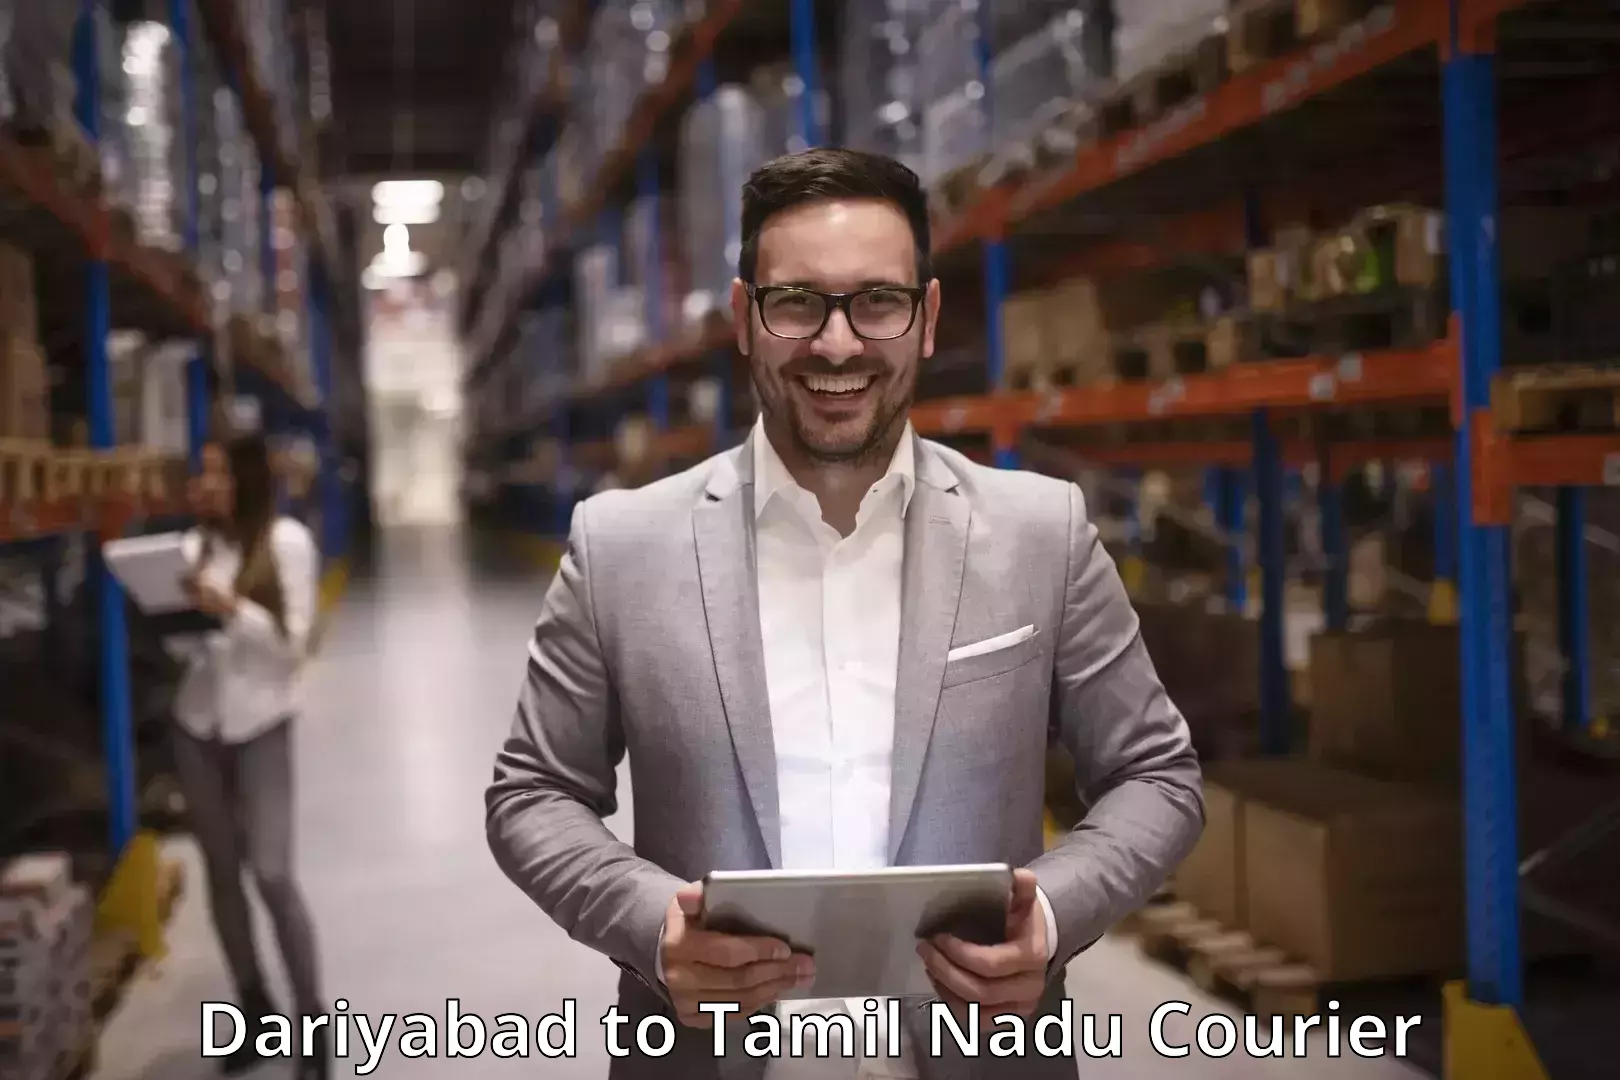 24/7 courier service in Dariyabad to Tamil Nadu